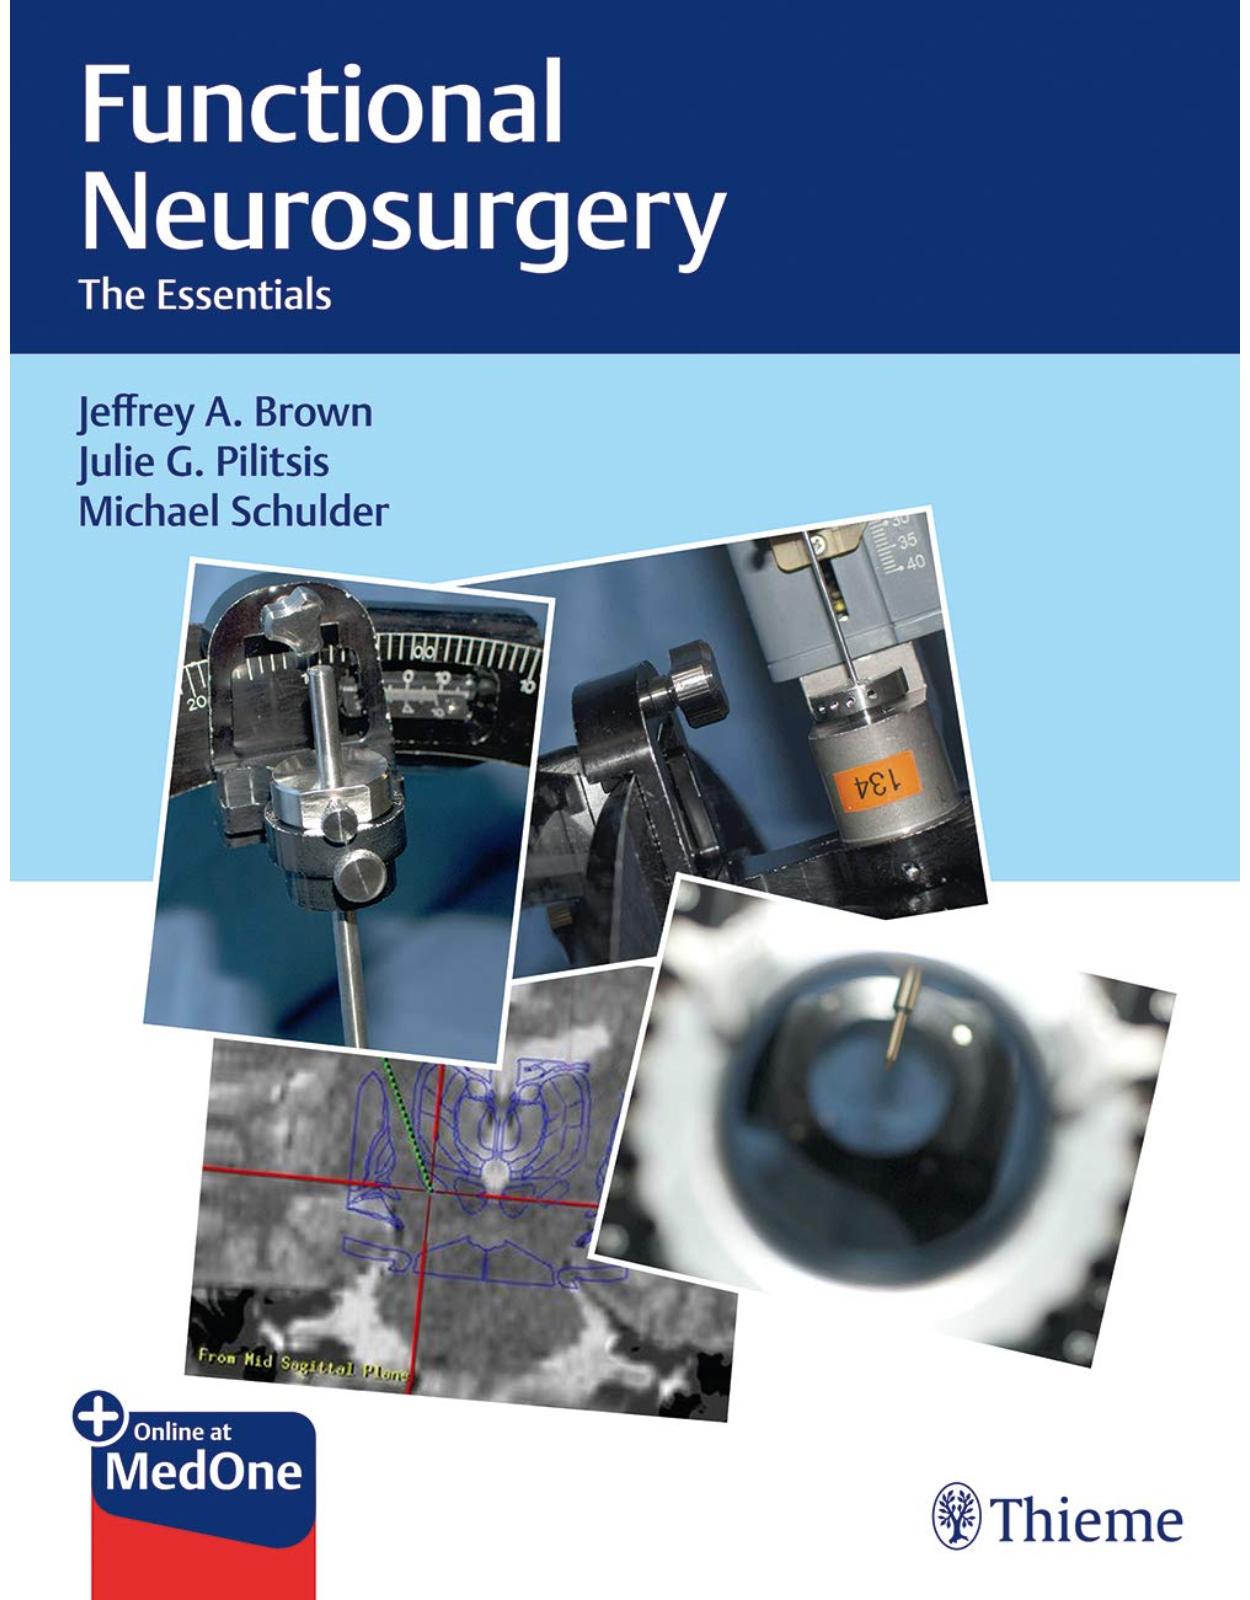 Functional Neurosurgery: The Essentials